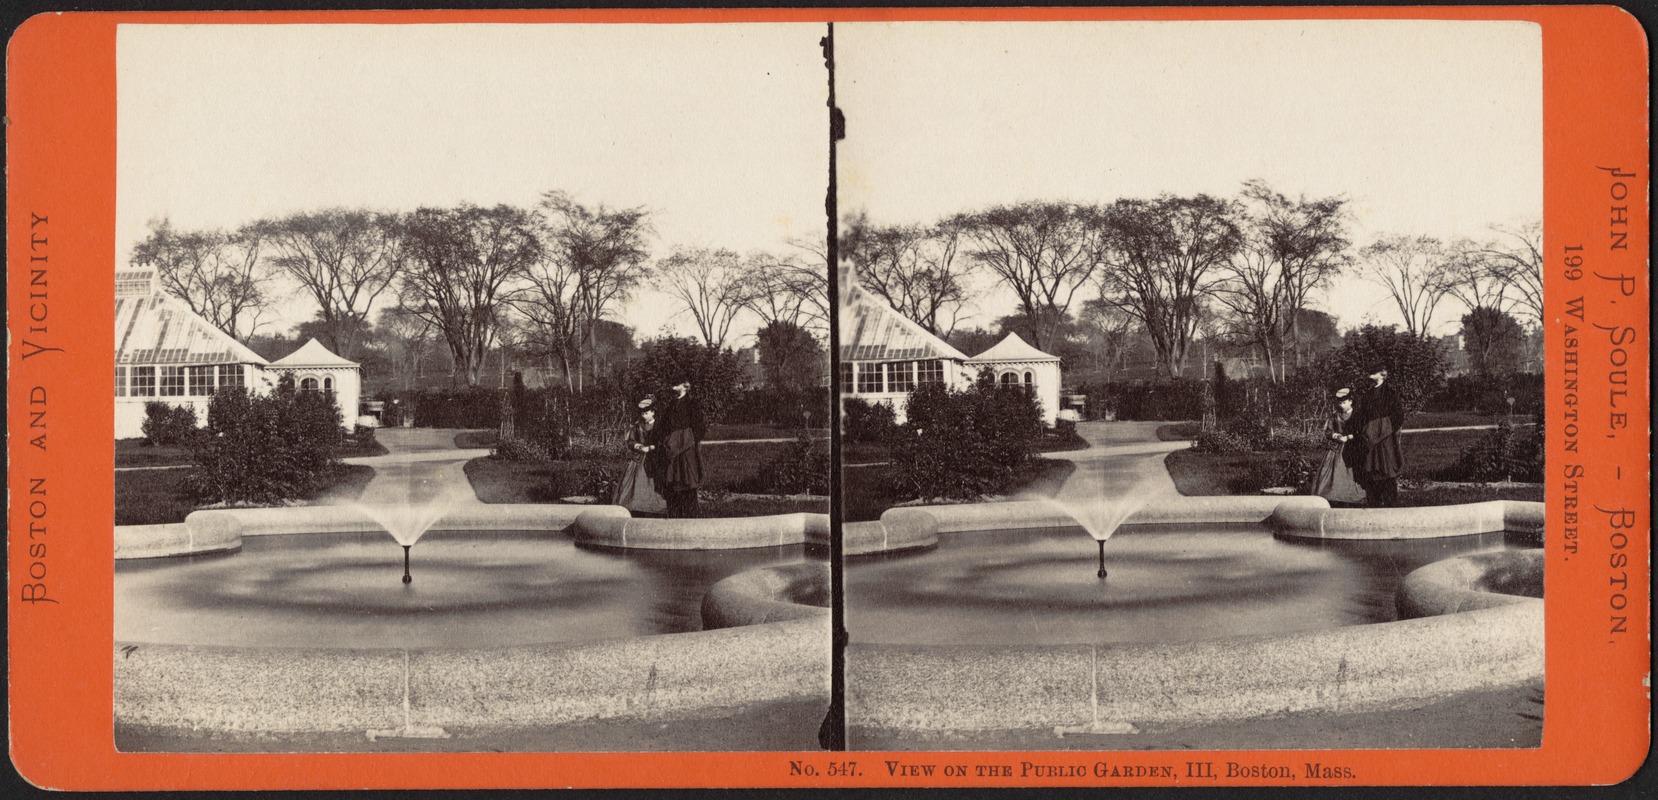 View on the Public Garden, III, Boston, Mass.